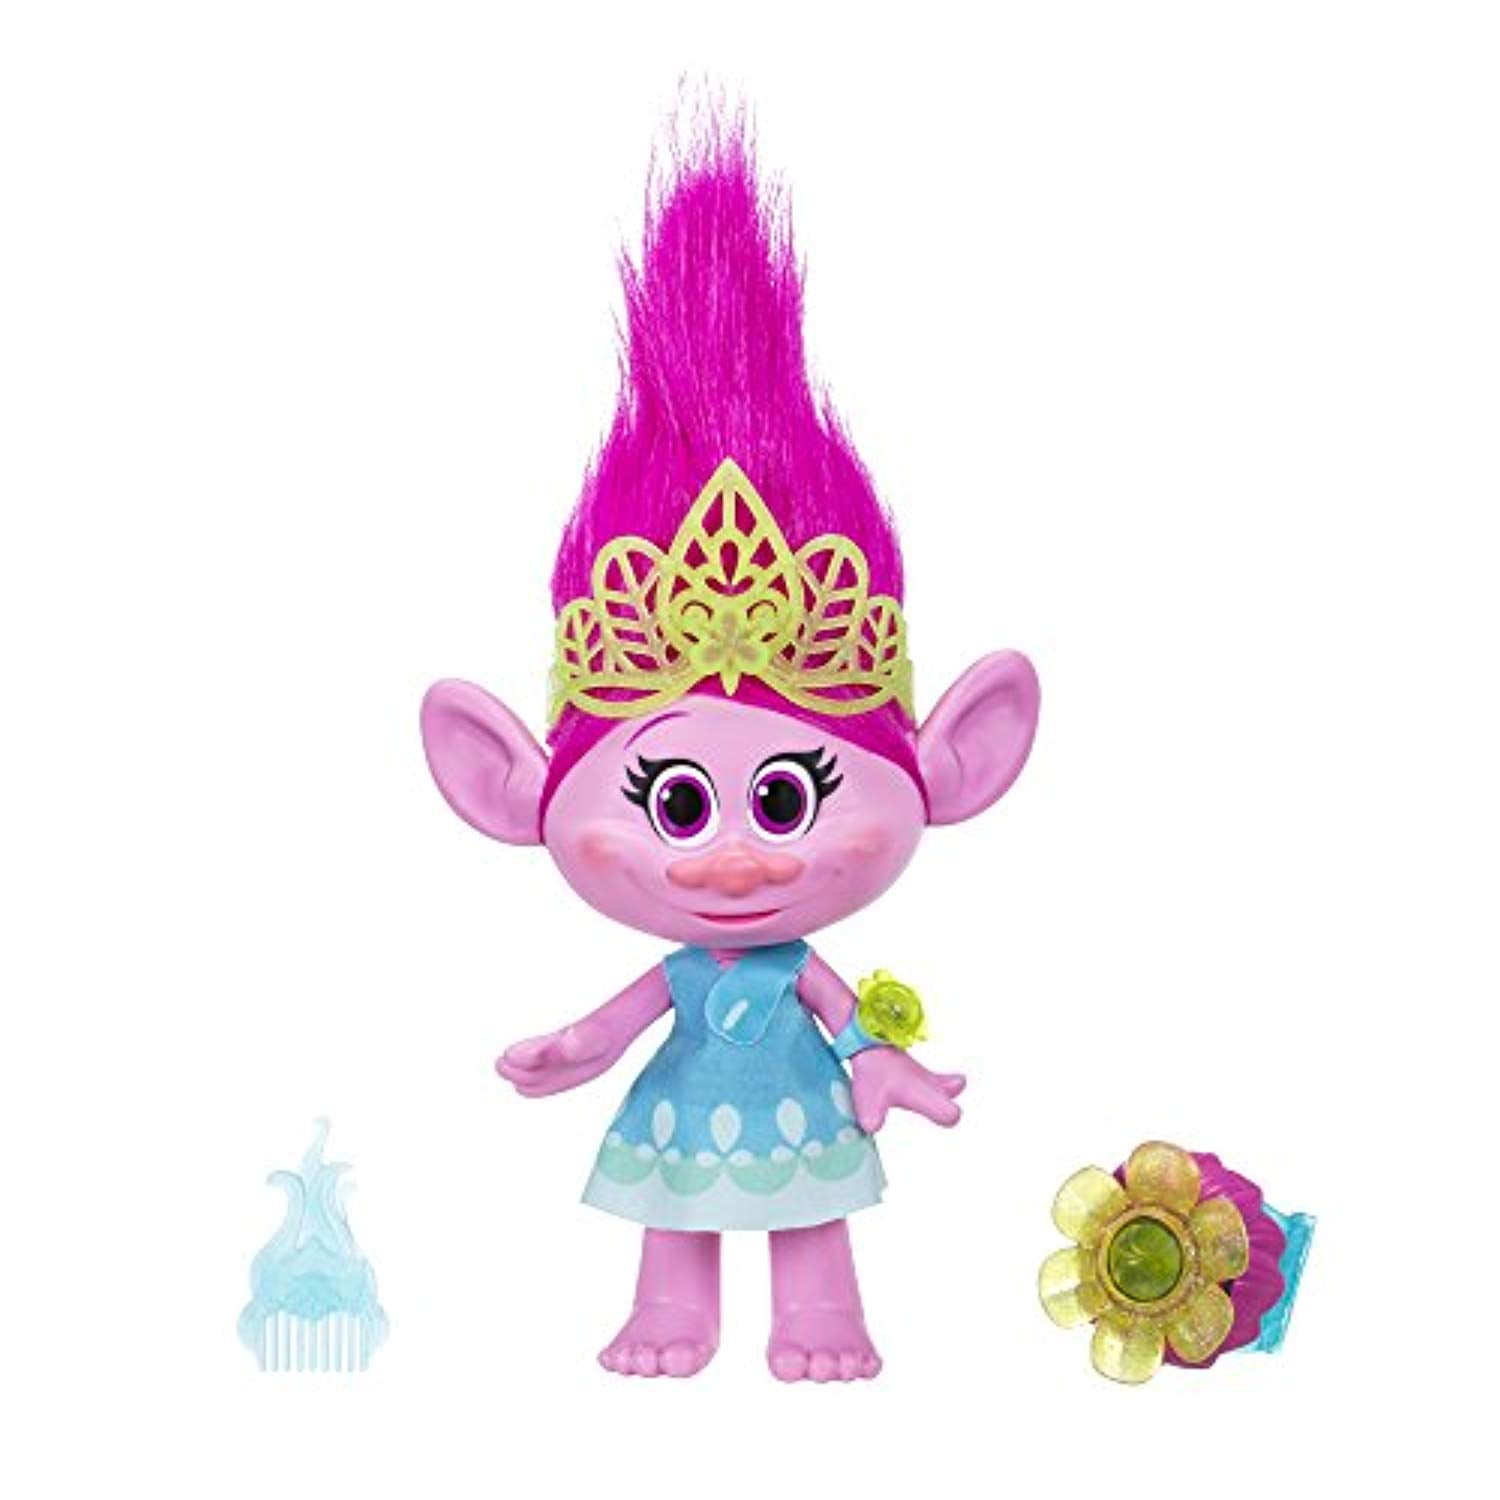 Trolls DreamWorks Wild Hair Pack Poppy Fashion Frenzy Set Ages 4 Toy Doll Play 